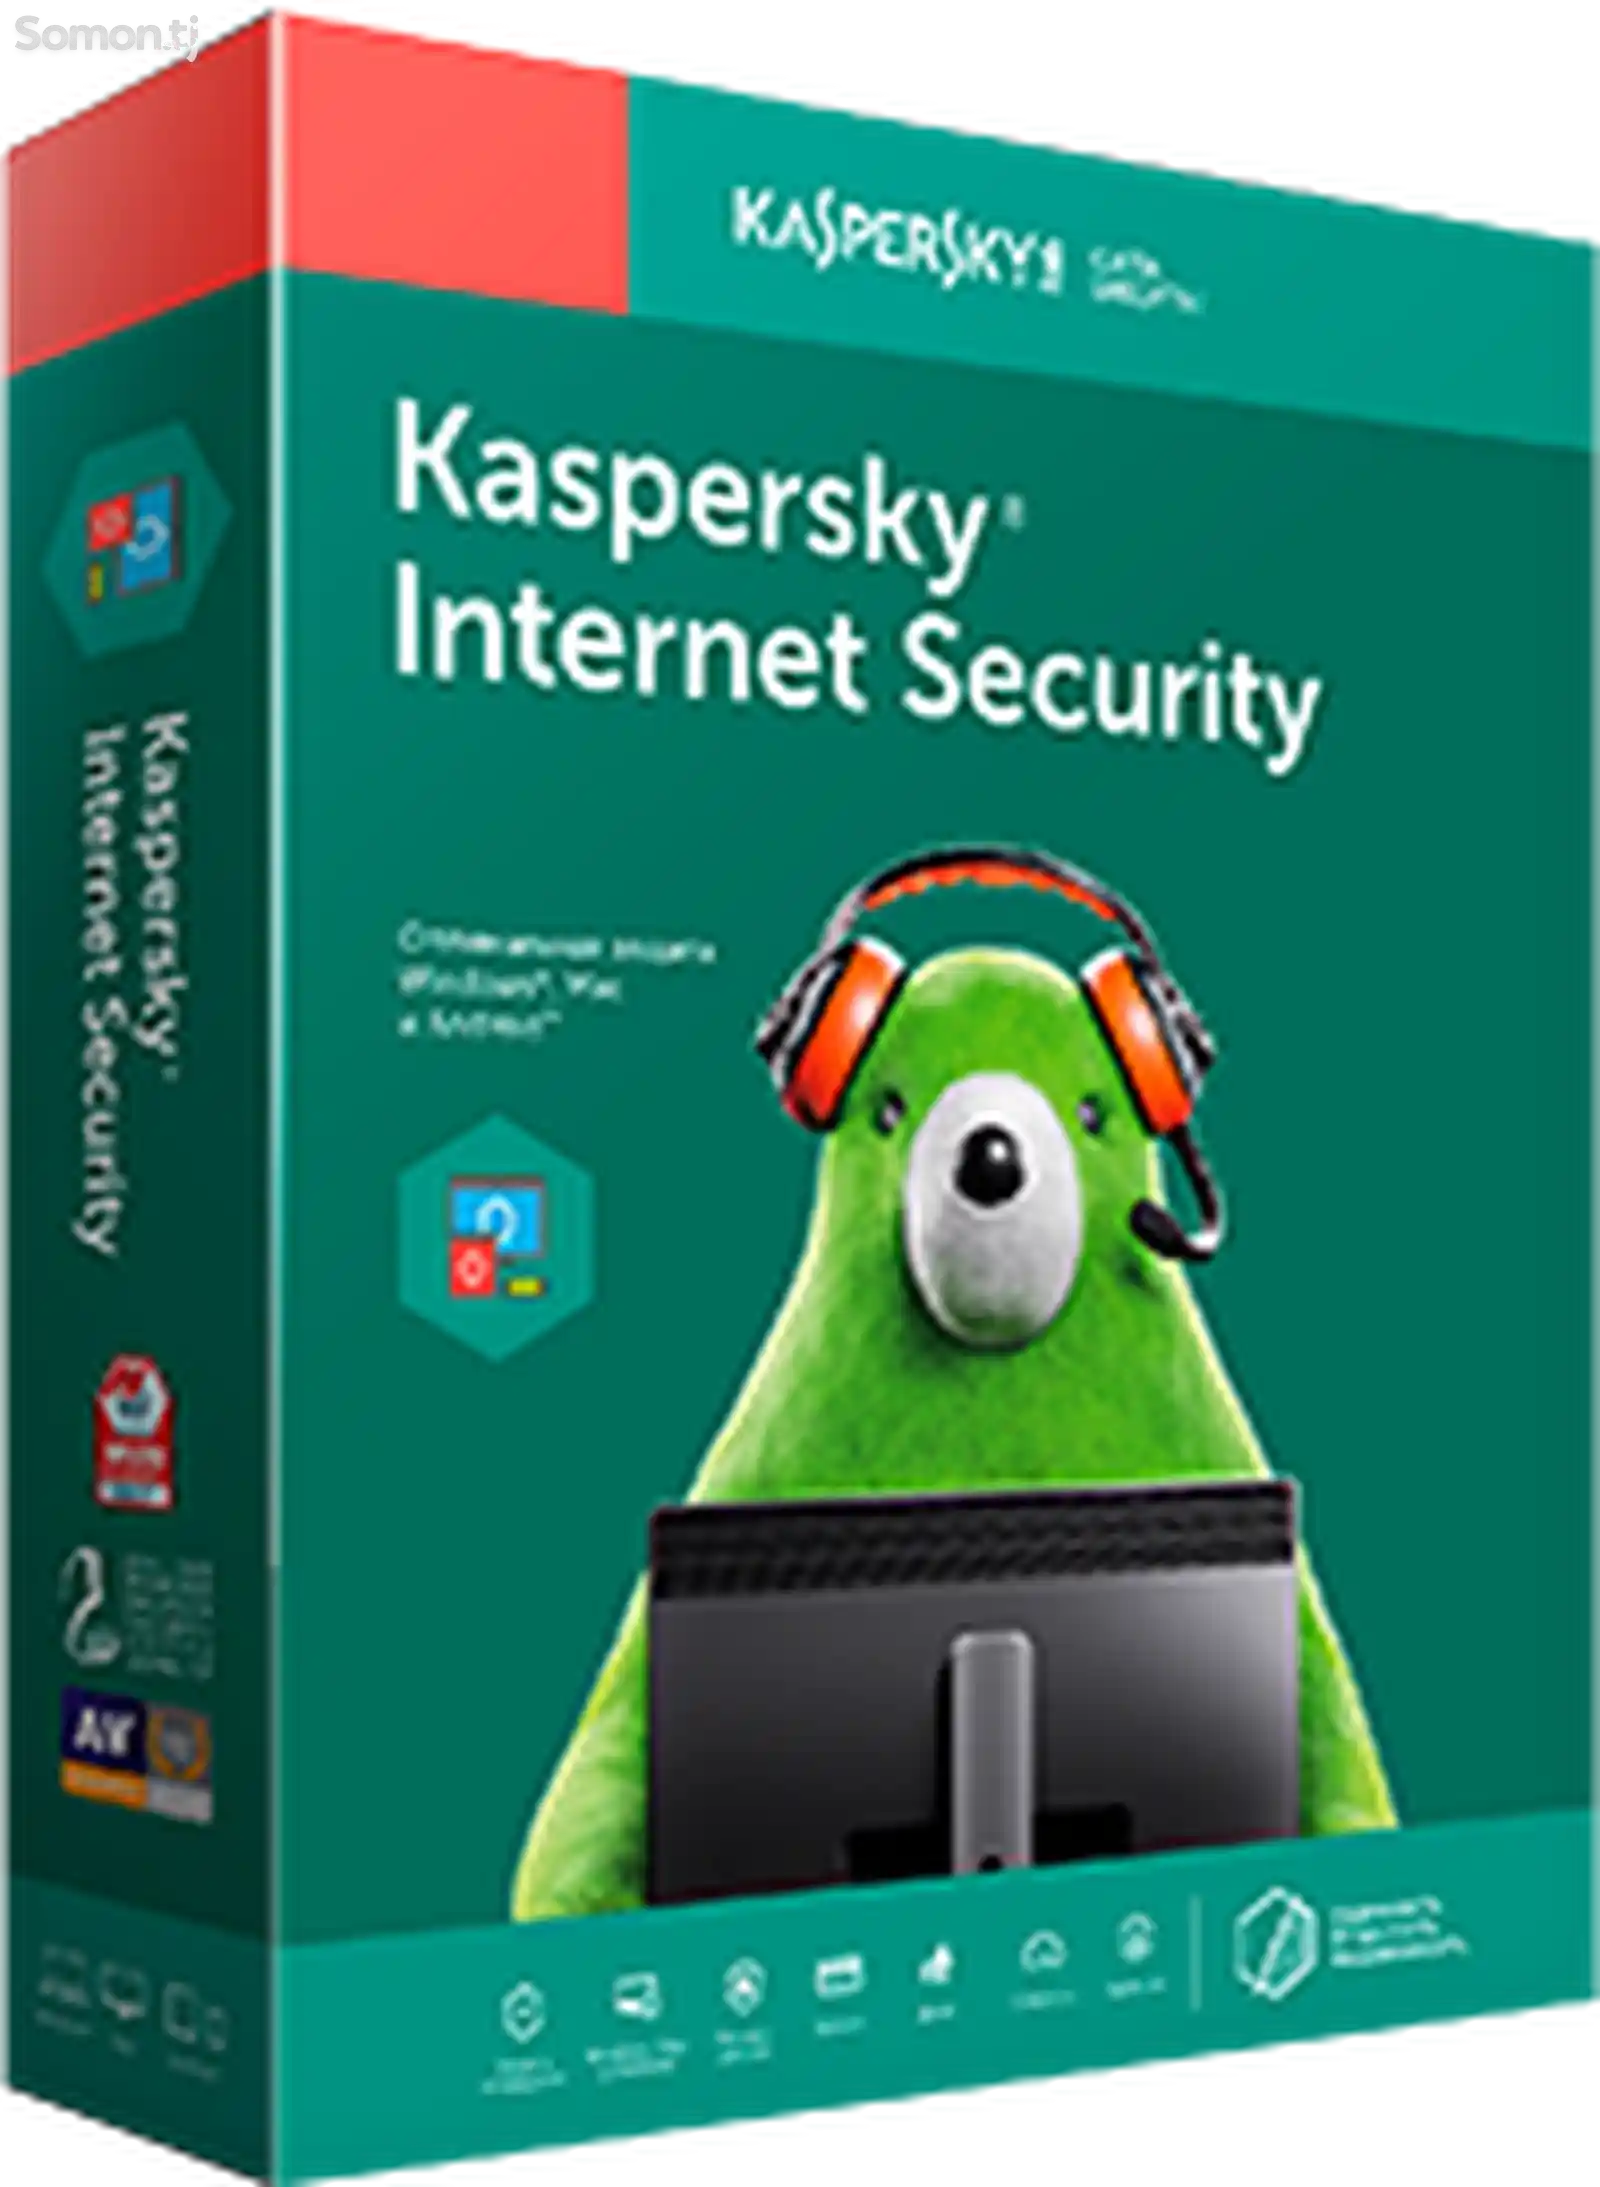 Kaspersky Internet Security - иҷозатнома барои 2 роёна, 1 сол